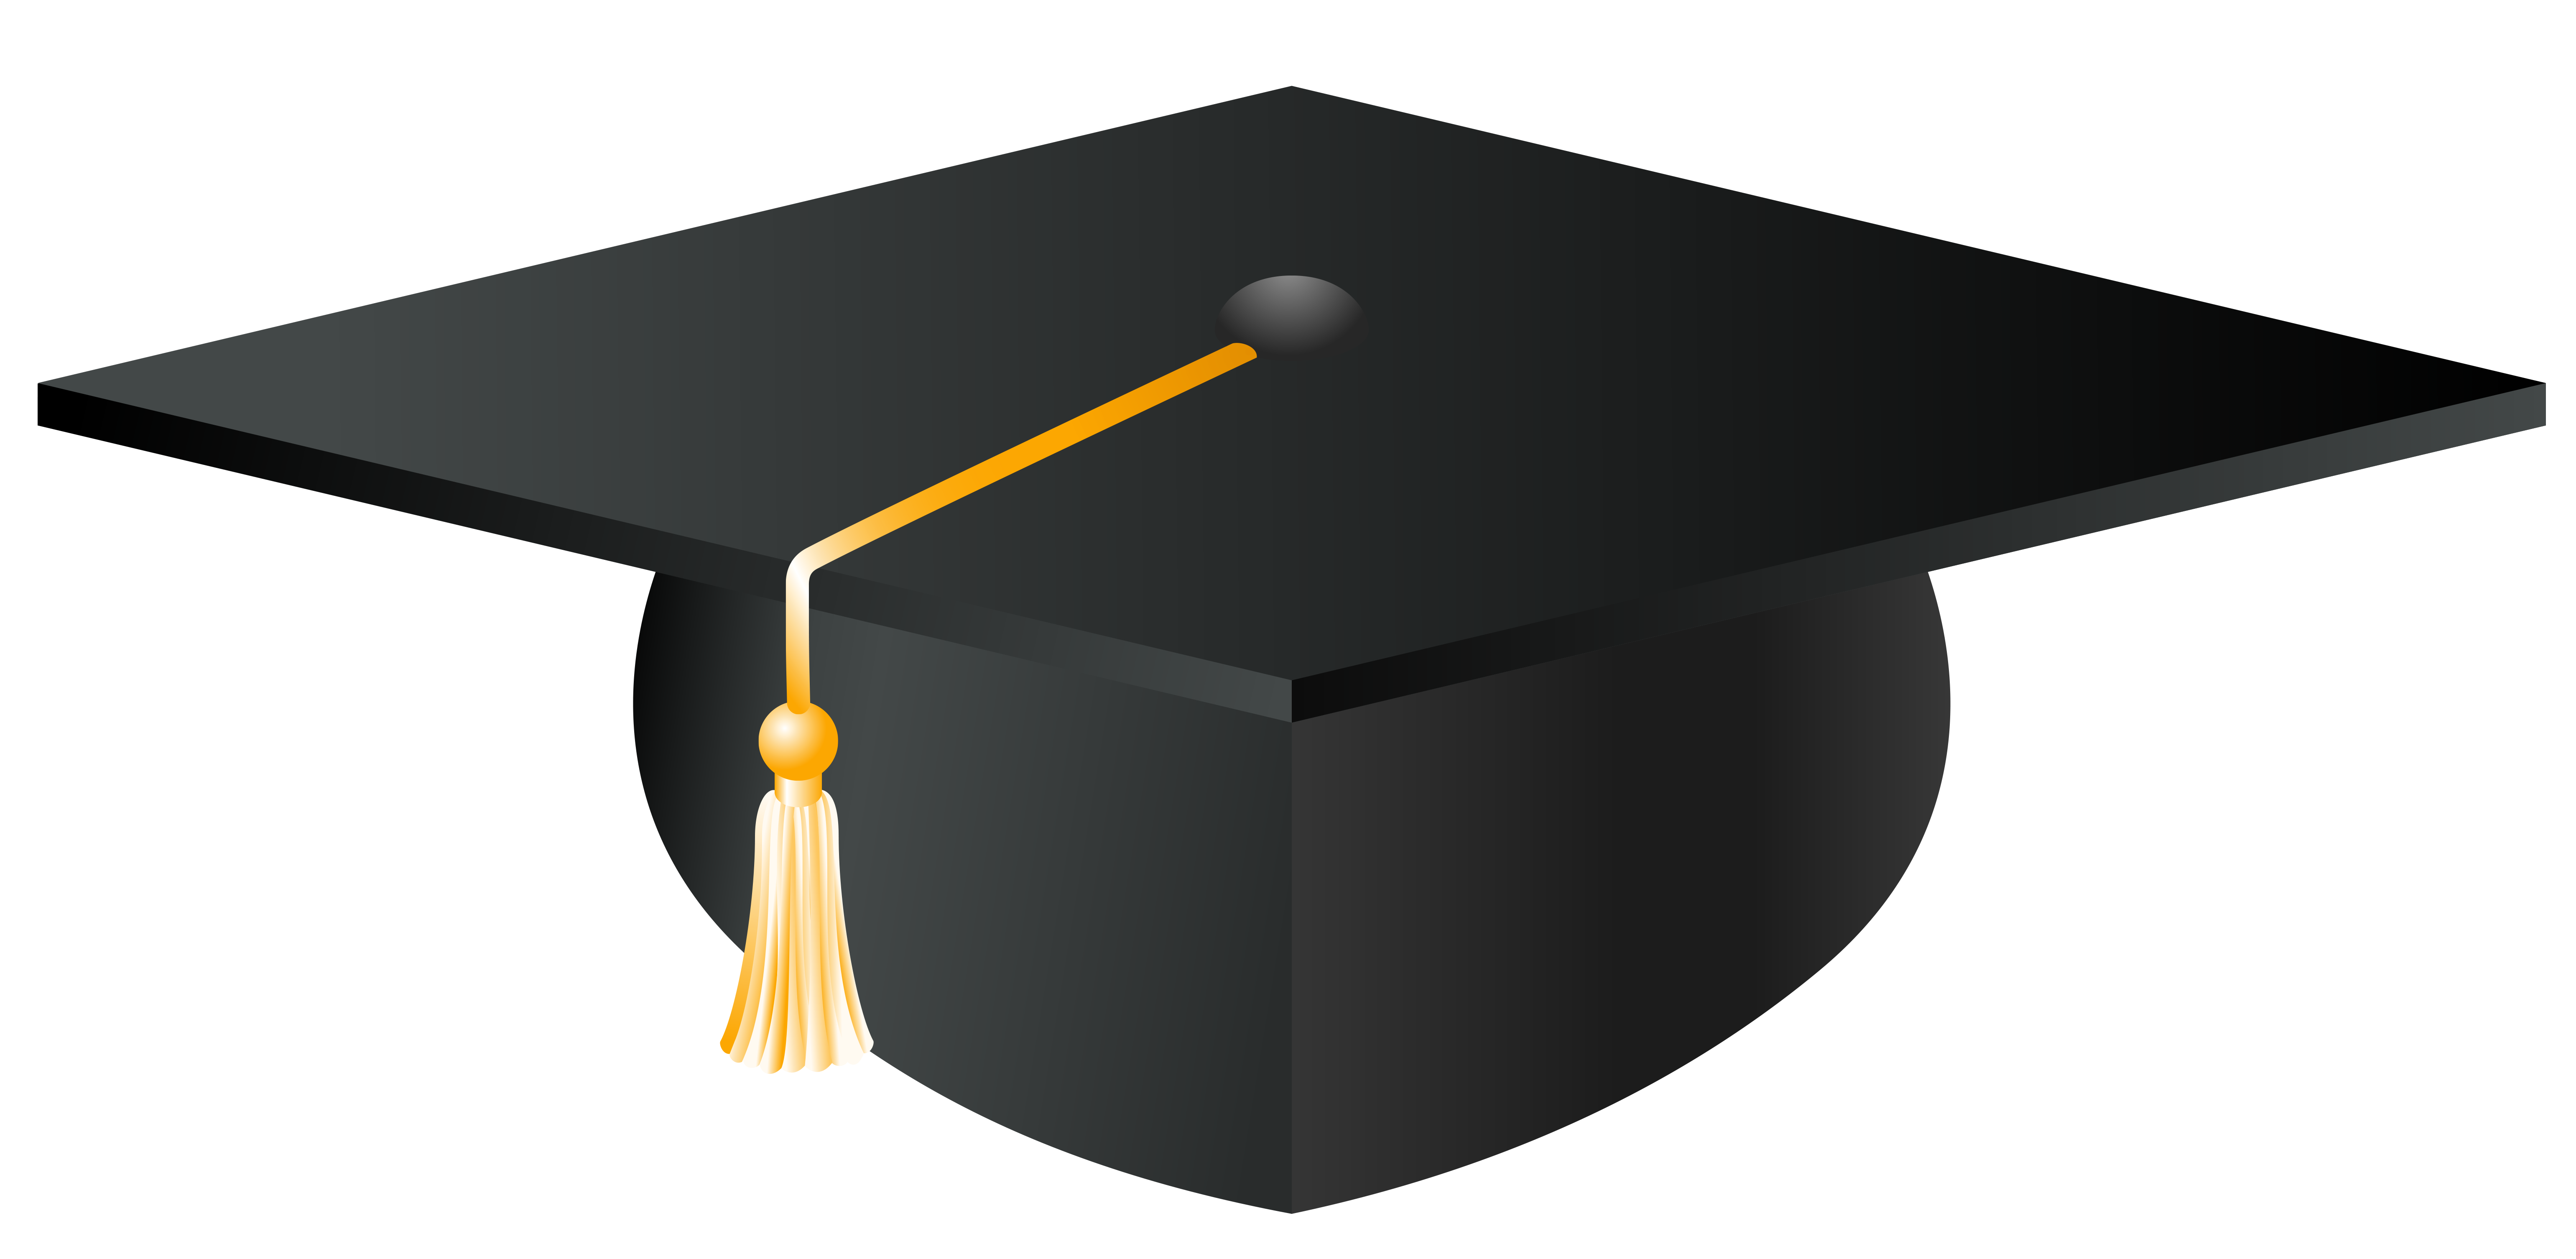 Free Graduation Hat Transparent Download Free Graduation Hat